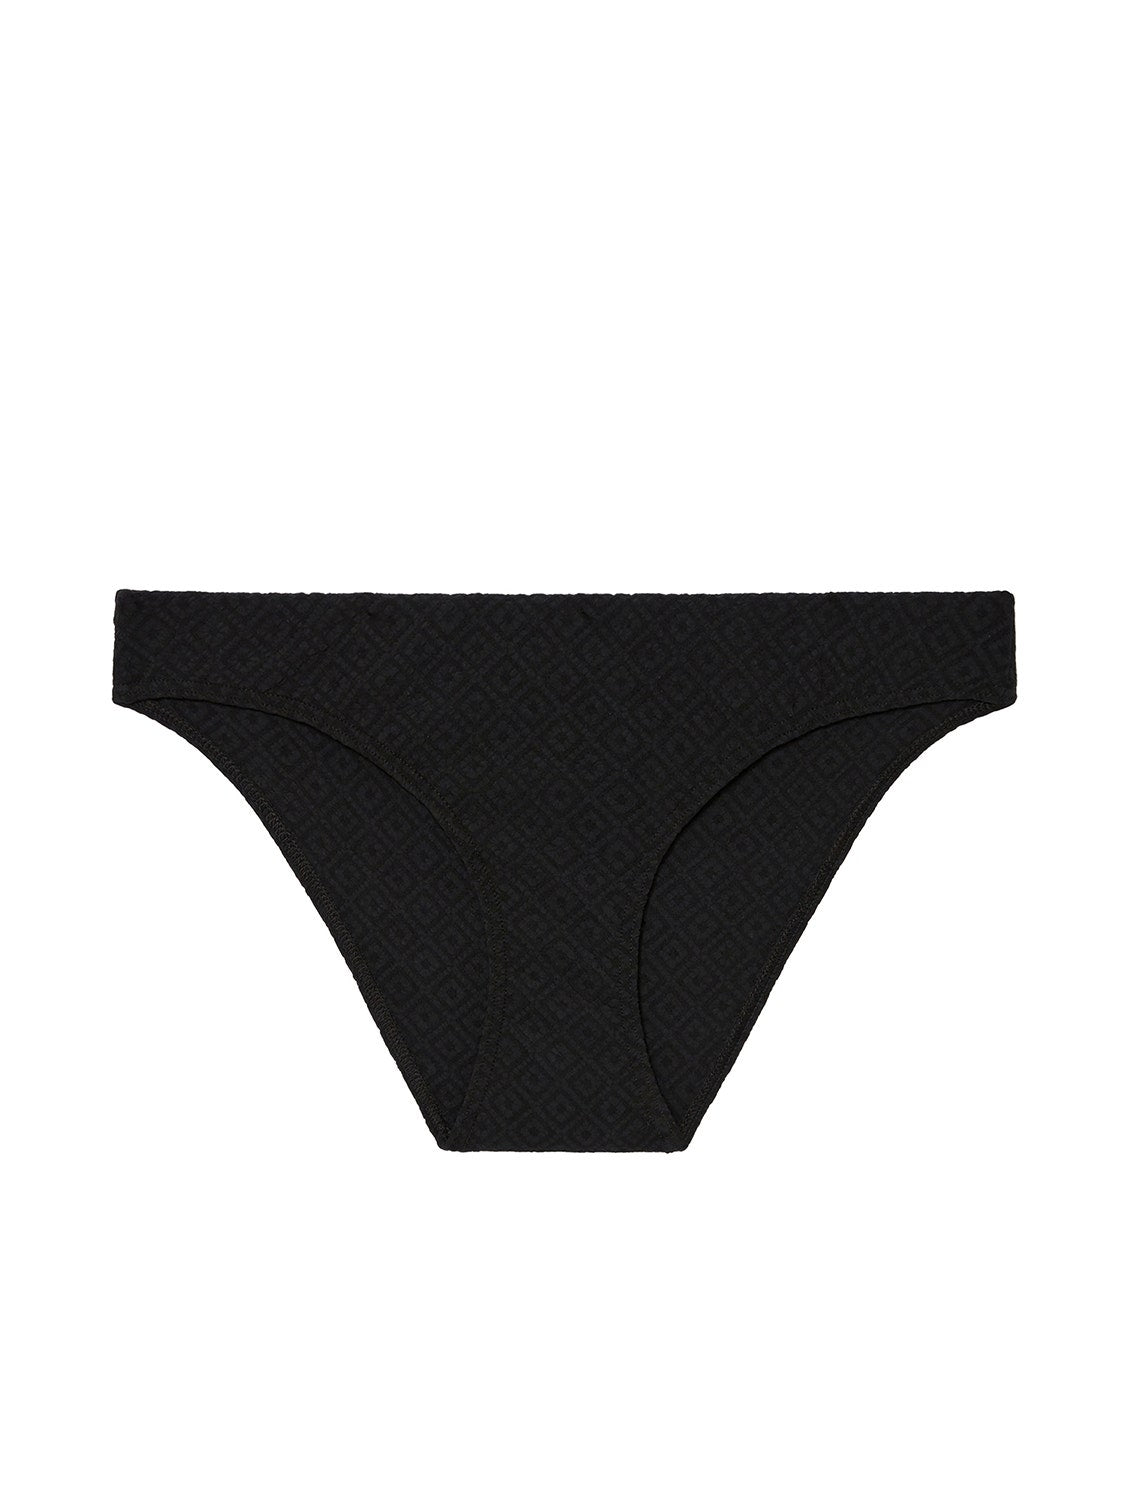 bikini-brief-black-dune-40